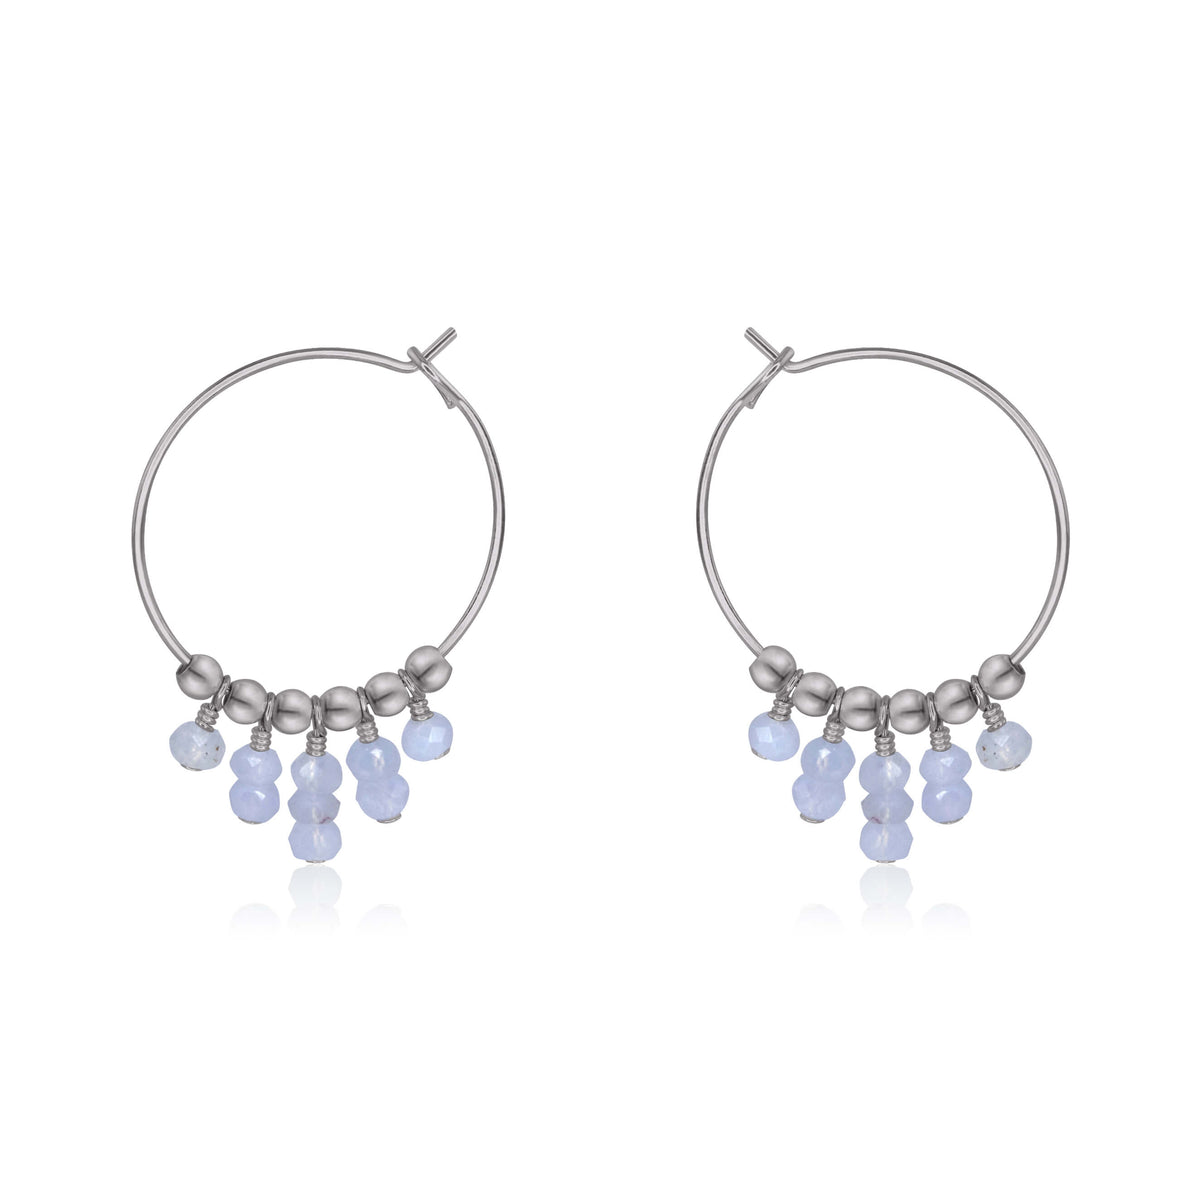 Hoop Earrings - Blue Lace Agate - Stainless Steel - Luna Tide Handmade Jewellery